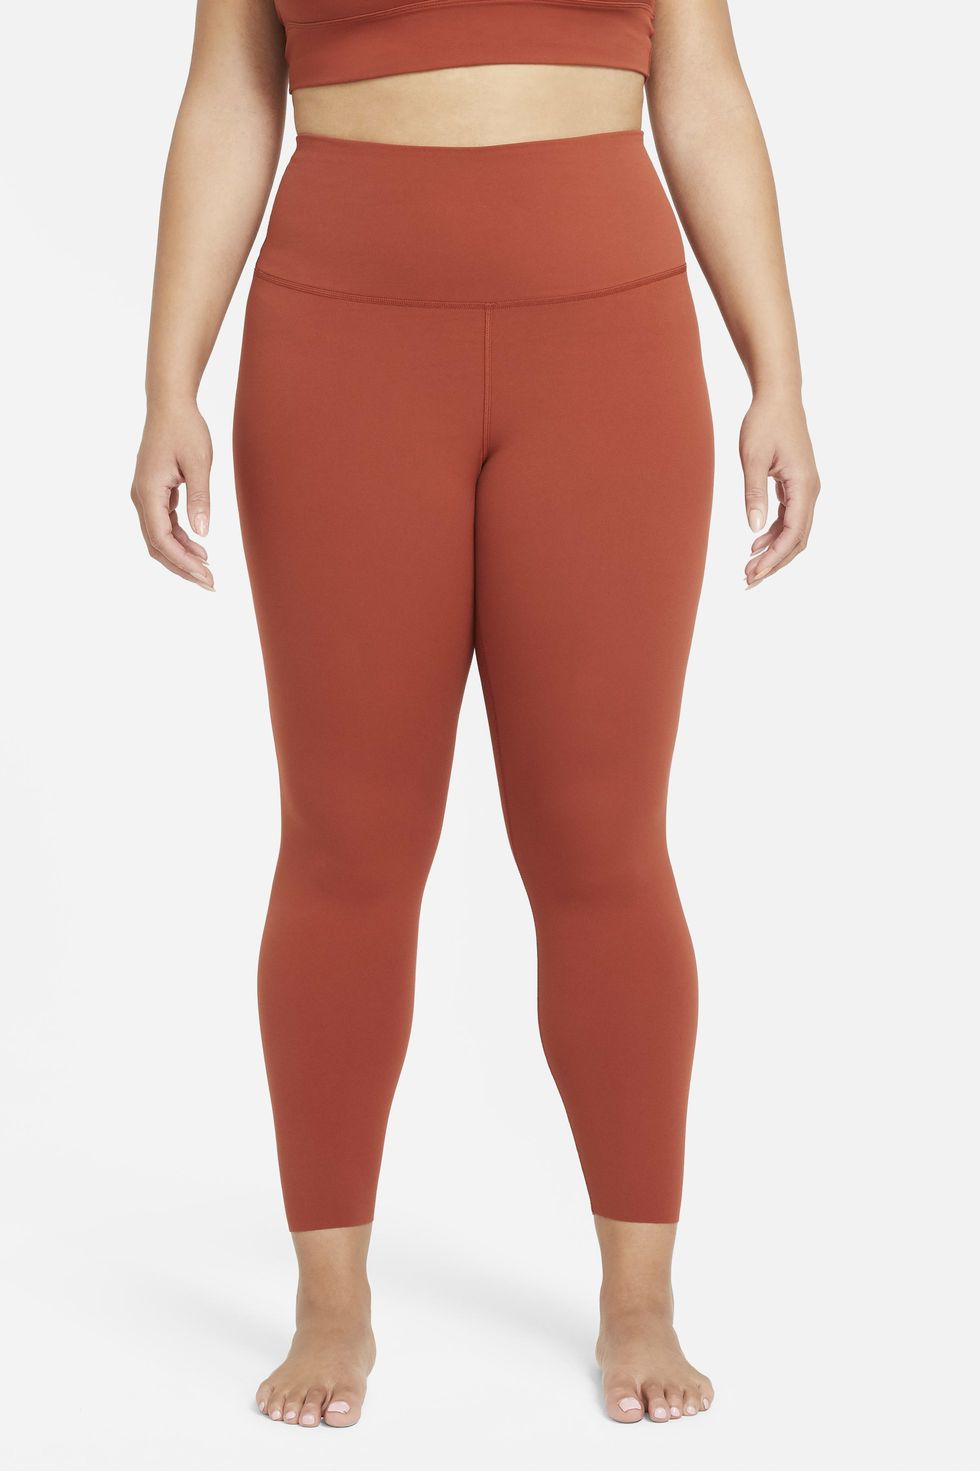 fvwitlyh Yoga plus Size Pants for Women Petite Women Leggings High